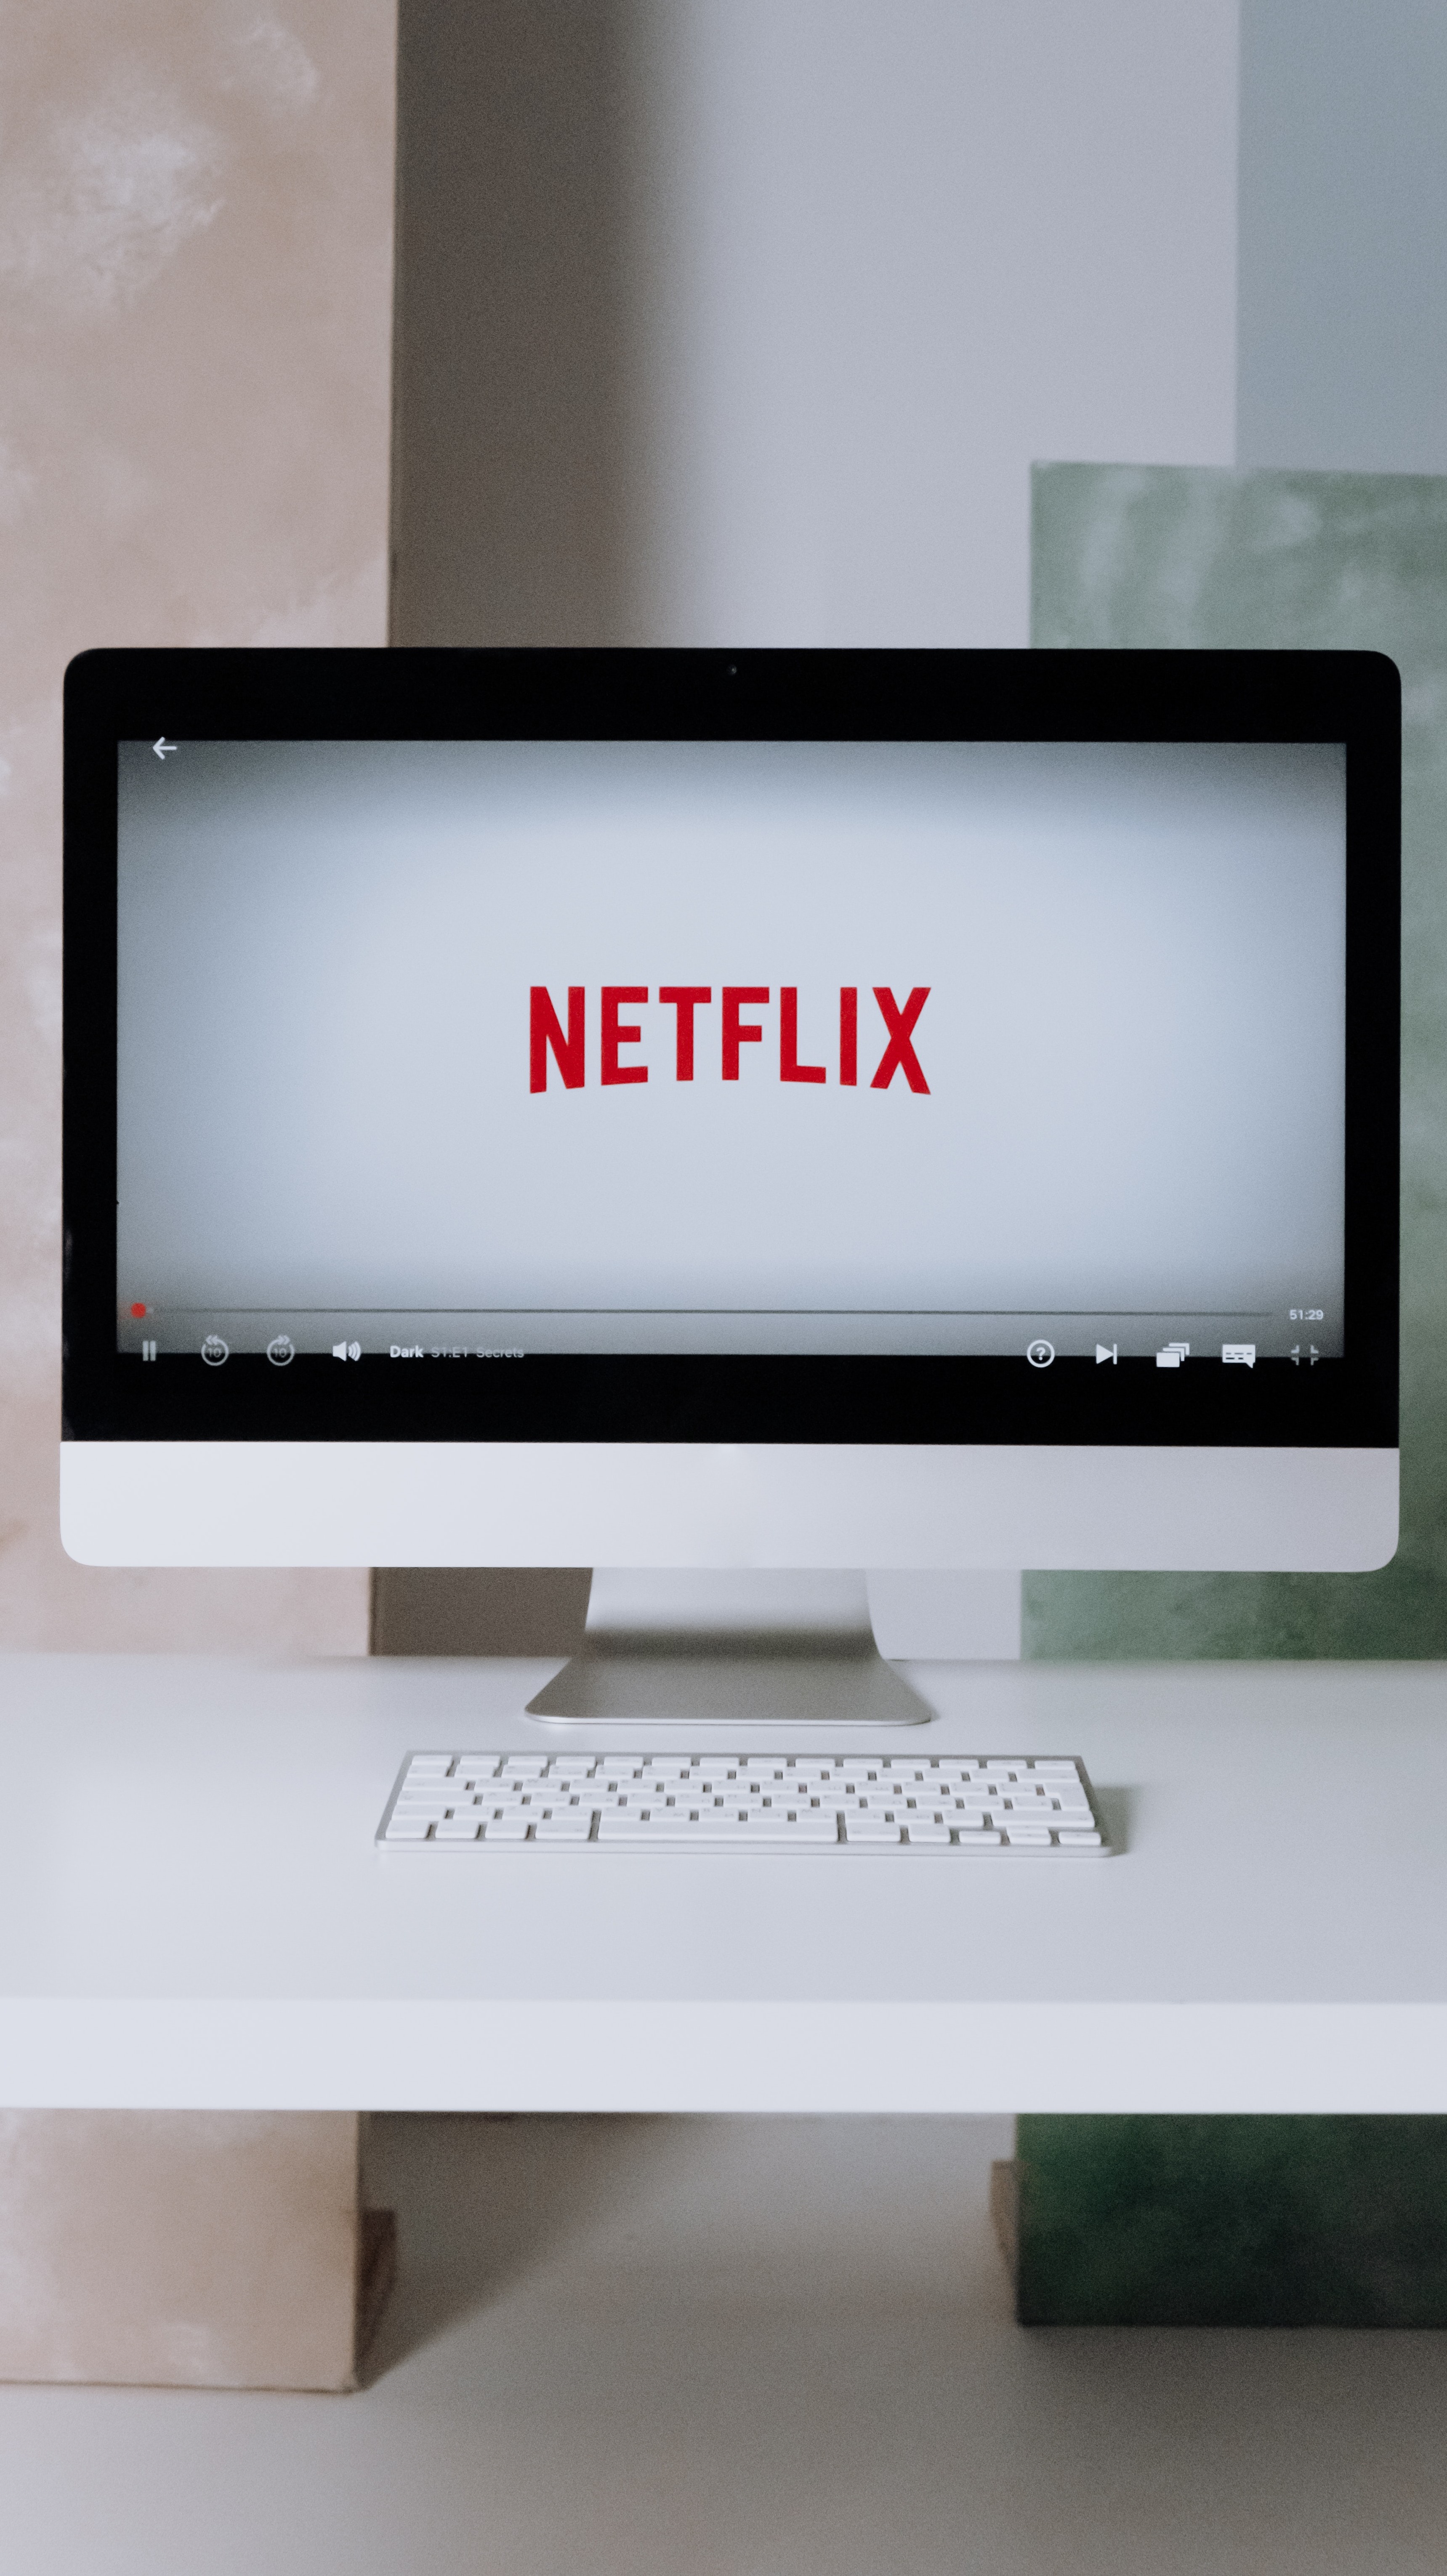 Códigos Netflix: Descubra todas as categorias escondidas